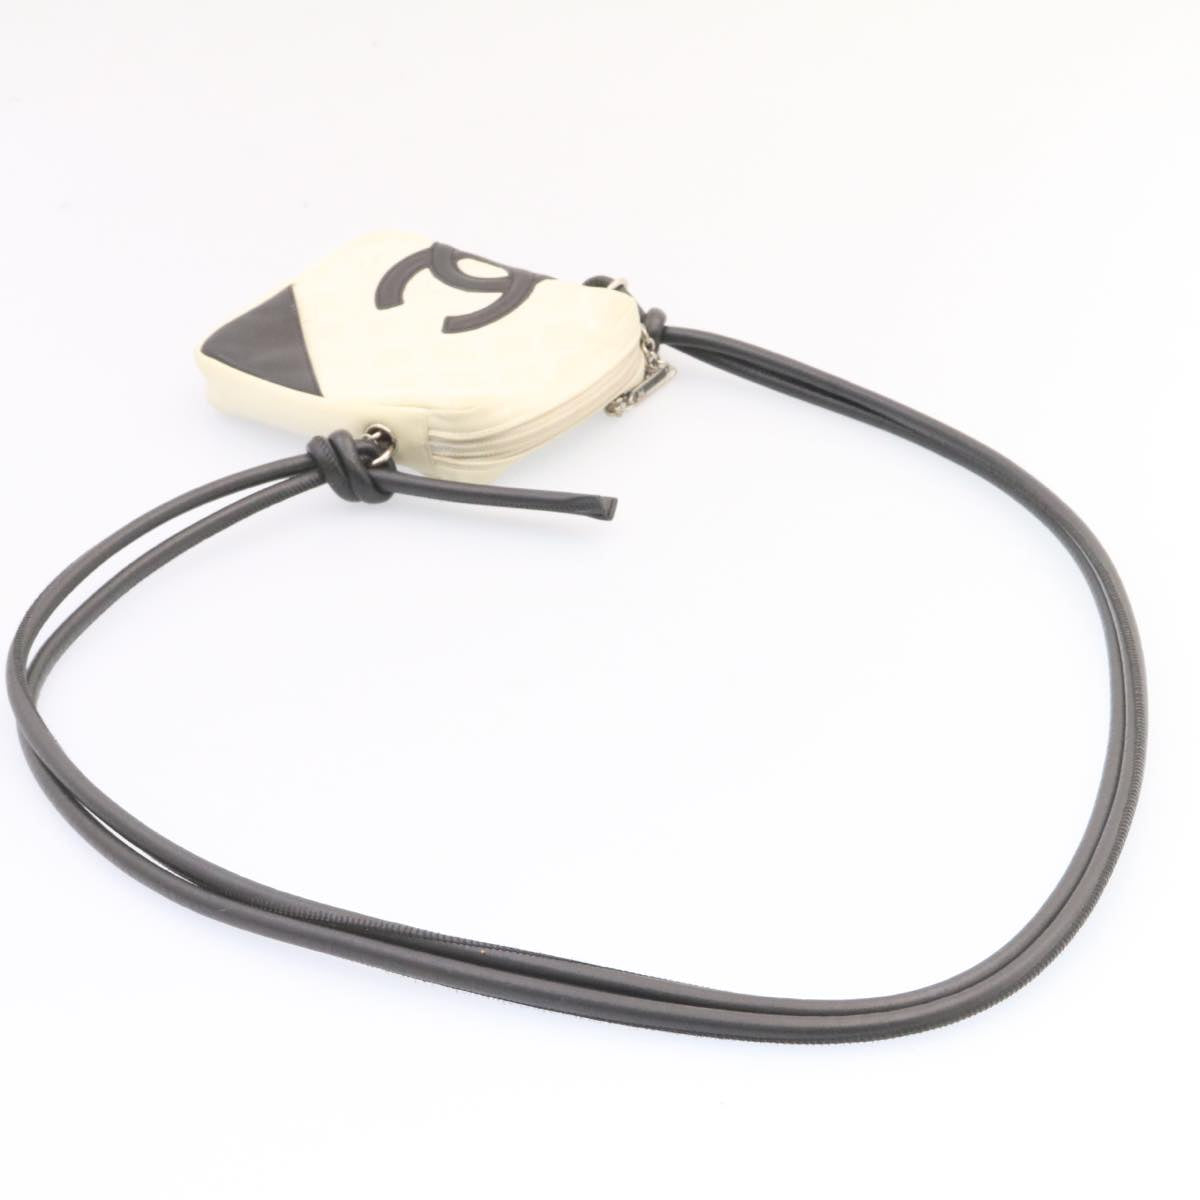 CHANEL Cambon Line Shoulder Bag Leather White Black CC Auth am1647gA